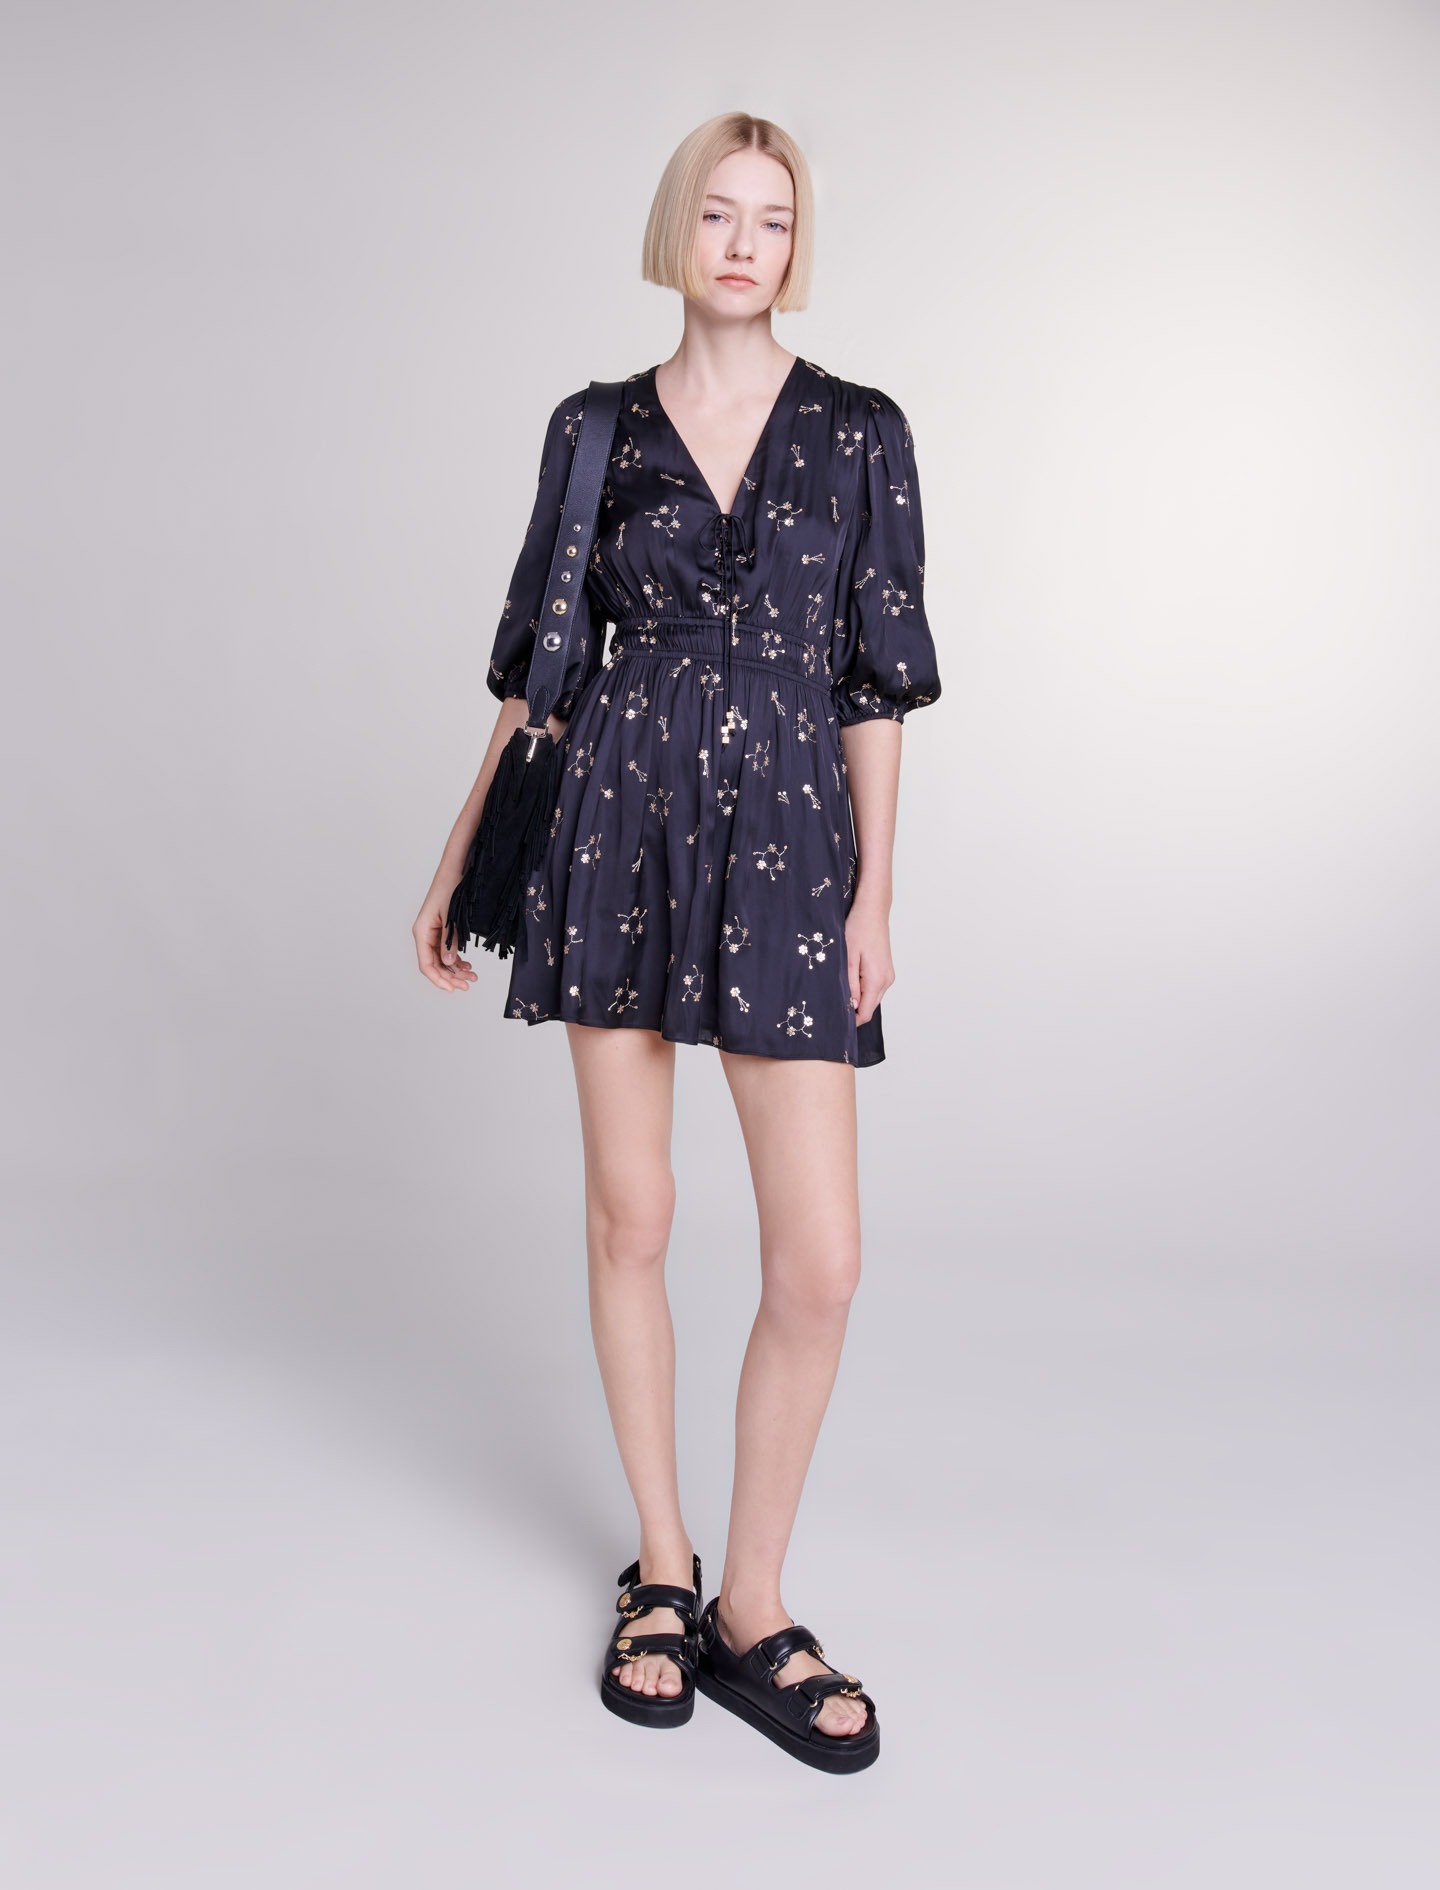 Maje Woman's polyester Sequins: Short sequin-embroidered dress for Spring/Summer, in color Black / Black